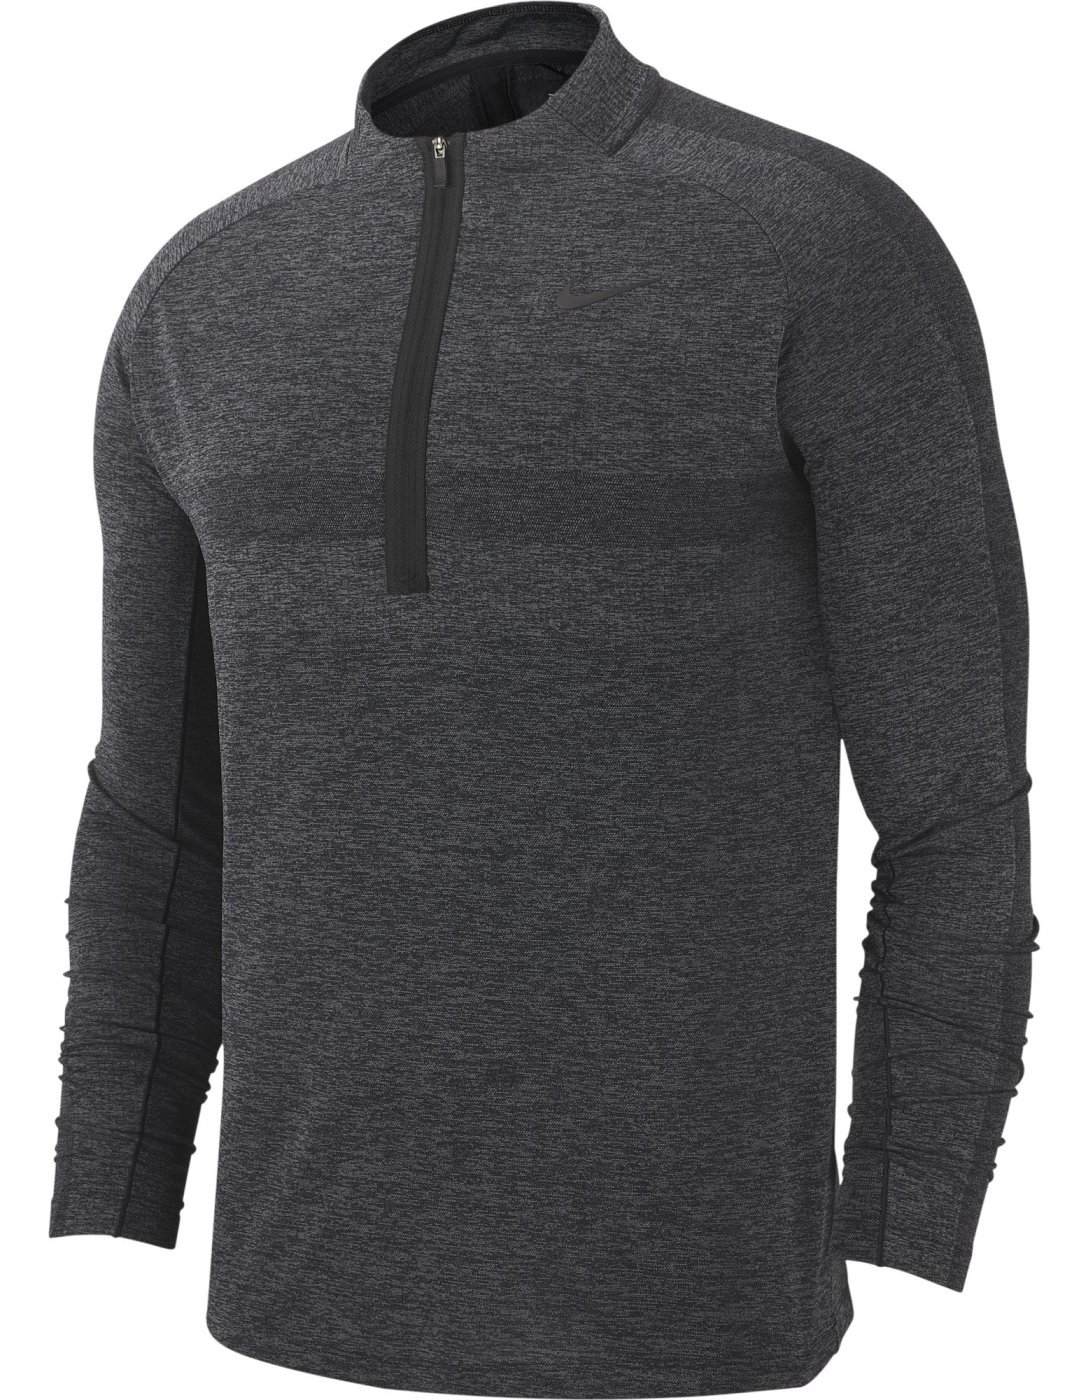 Pulover s kapuco/Pulover Nike Dry Knit Statement 1/2 Zip Mens Sweater Black/Dark Grey S